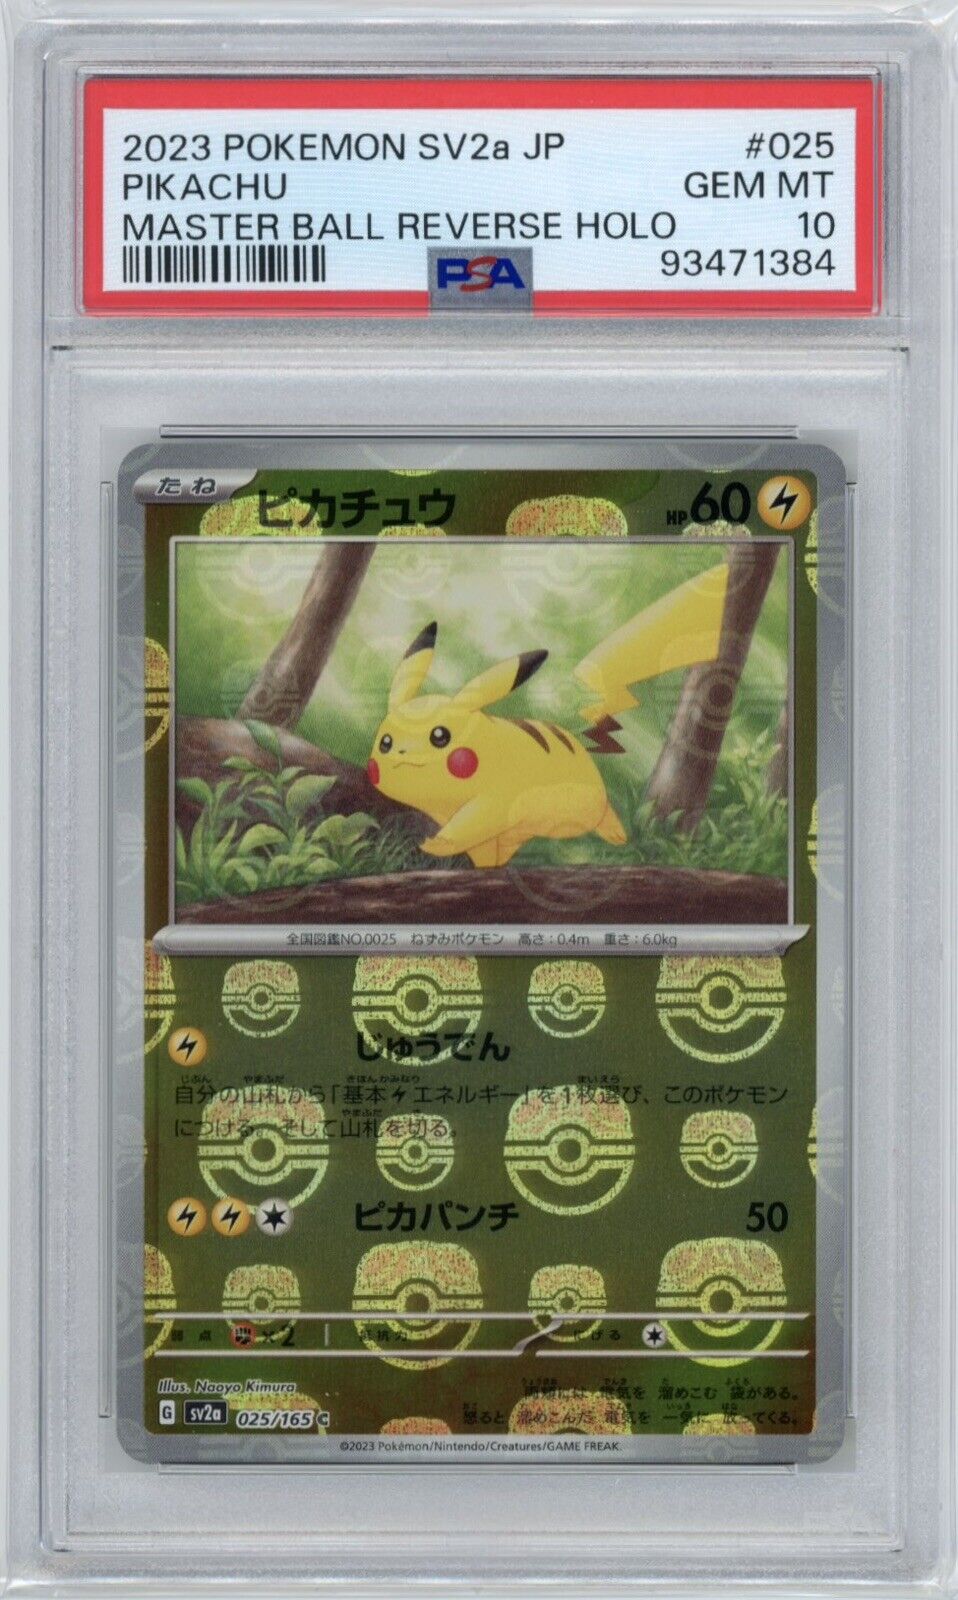 Pikachu 025/165 Master Ball Reverse Holo - Japanese 151 SV2a Pokemon Card PSA 10